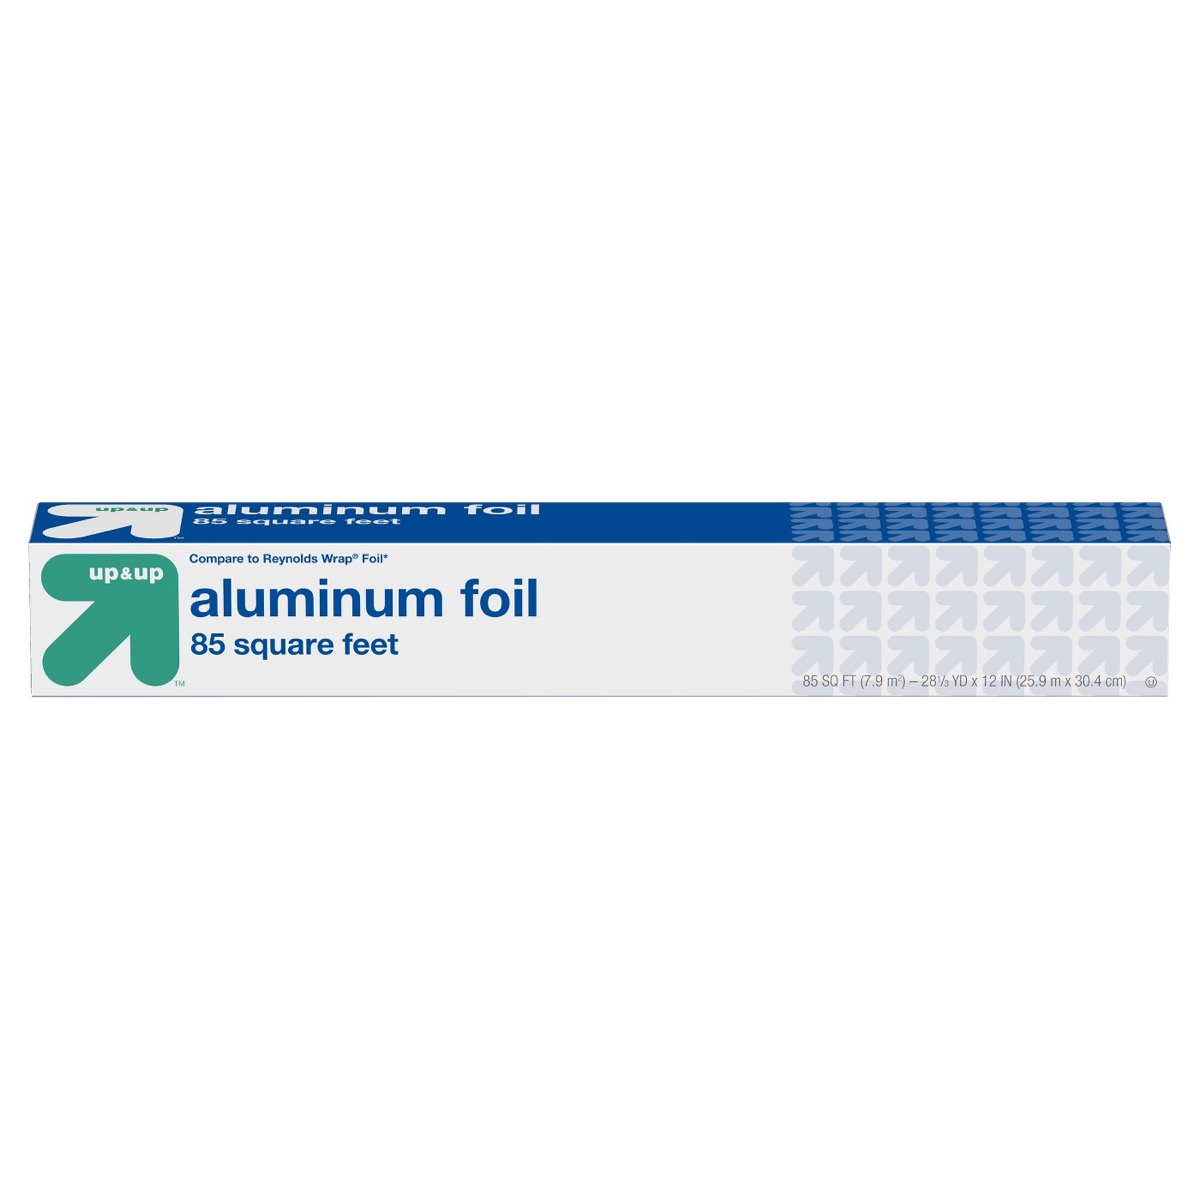 https://bestlifeonline.com/wp-content/uploads/sites/3/2019/01/aluminum-foil.jpg?quality=82&strip=all